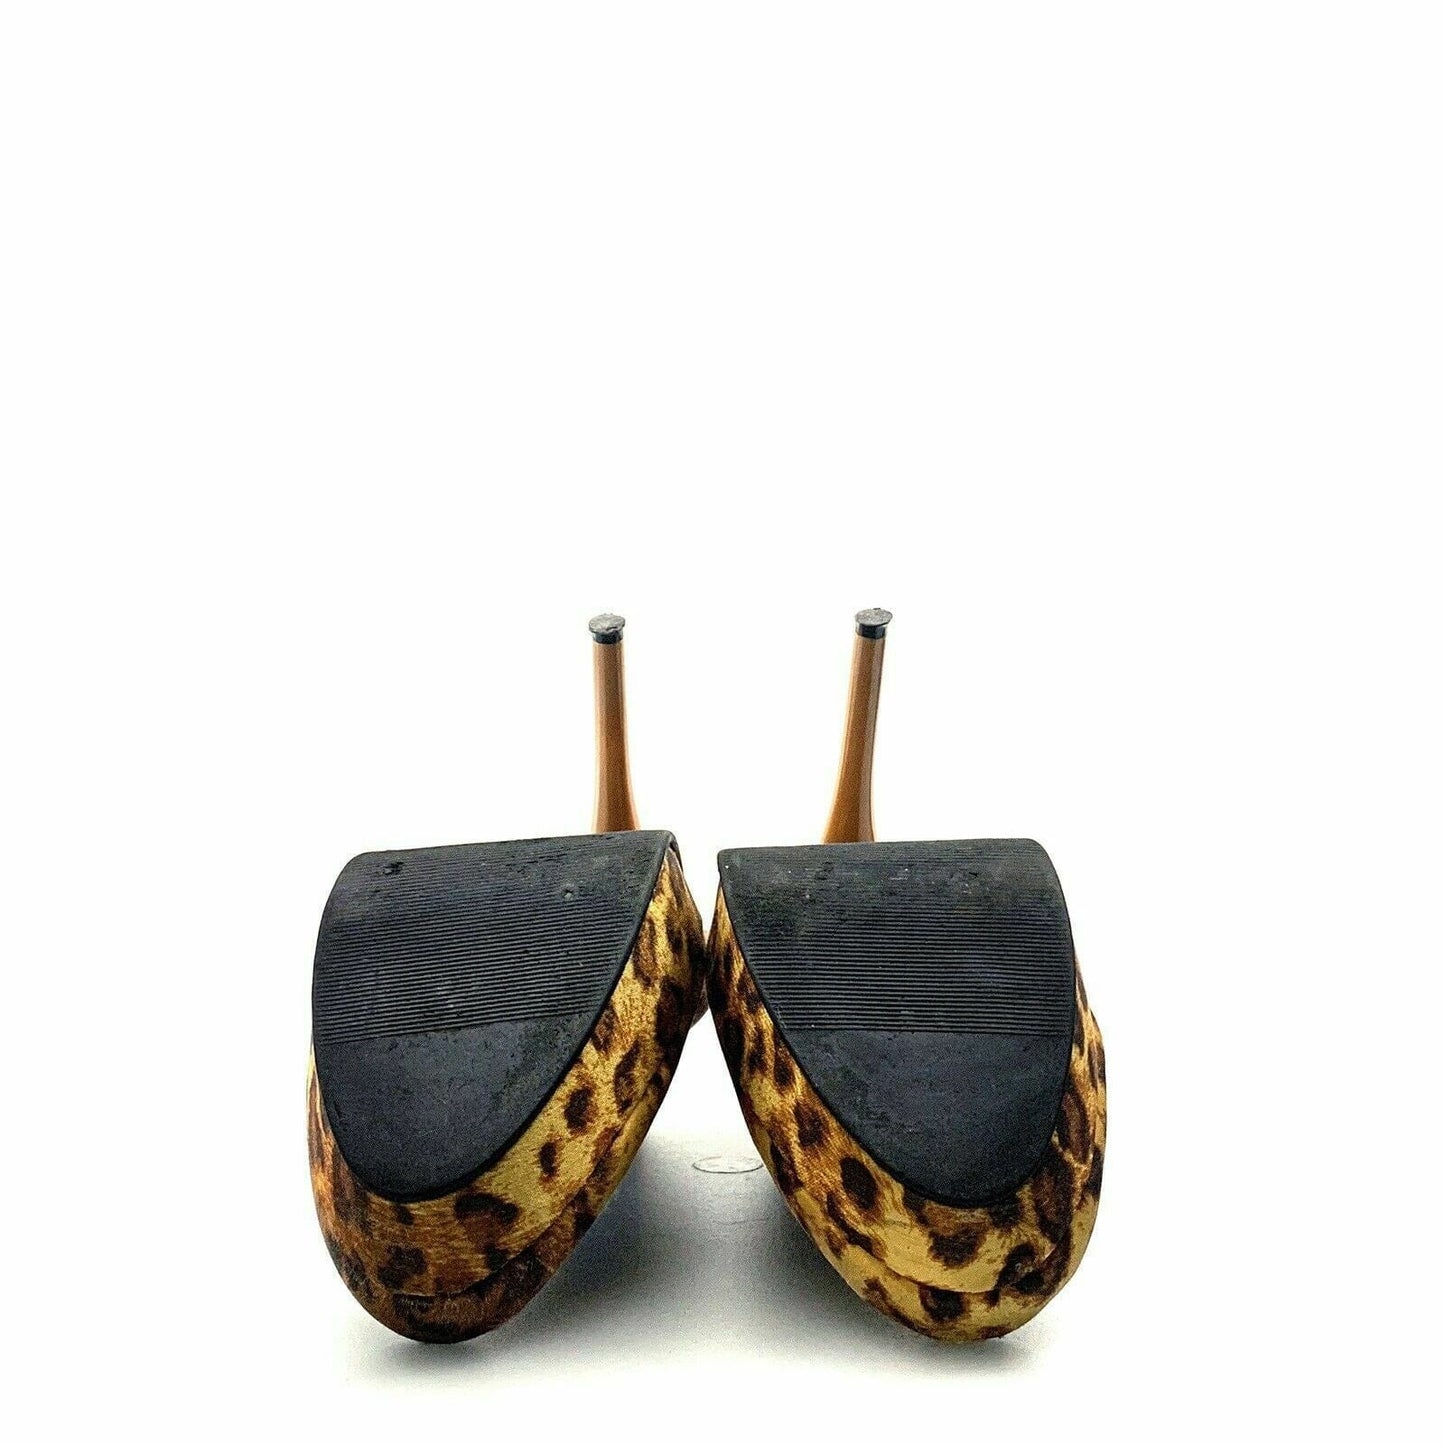 Fahrenheit Womens Size 7.5 Brown Leopard Heels Platform Stiletto Shoes